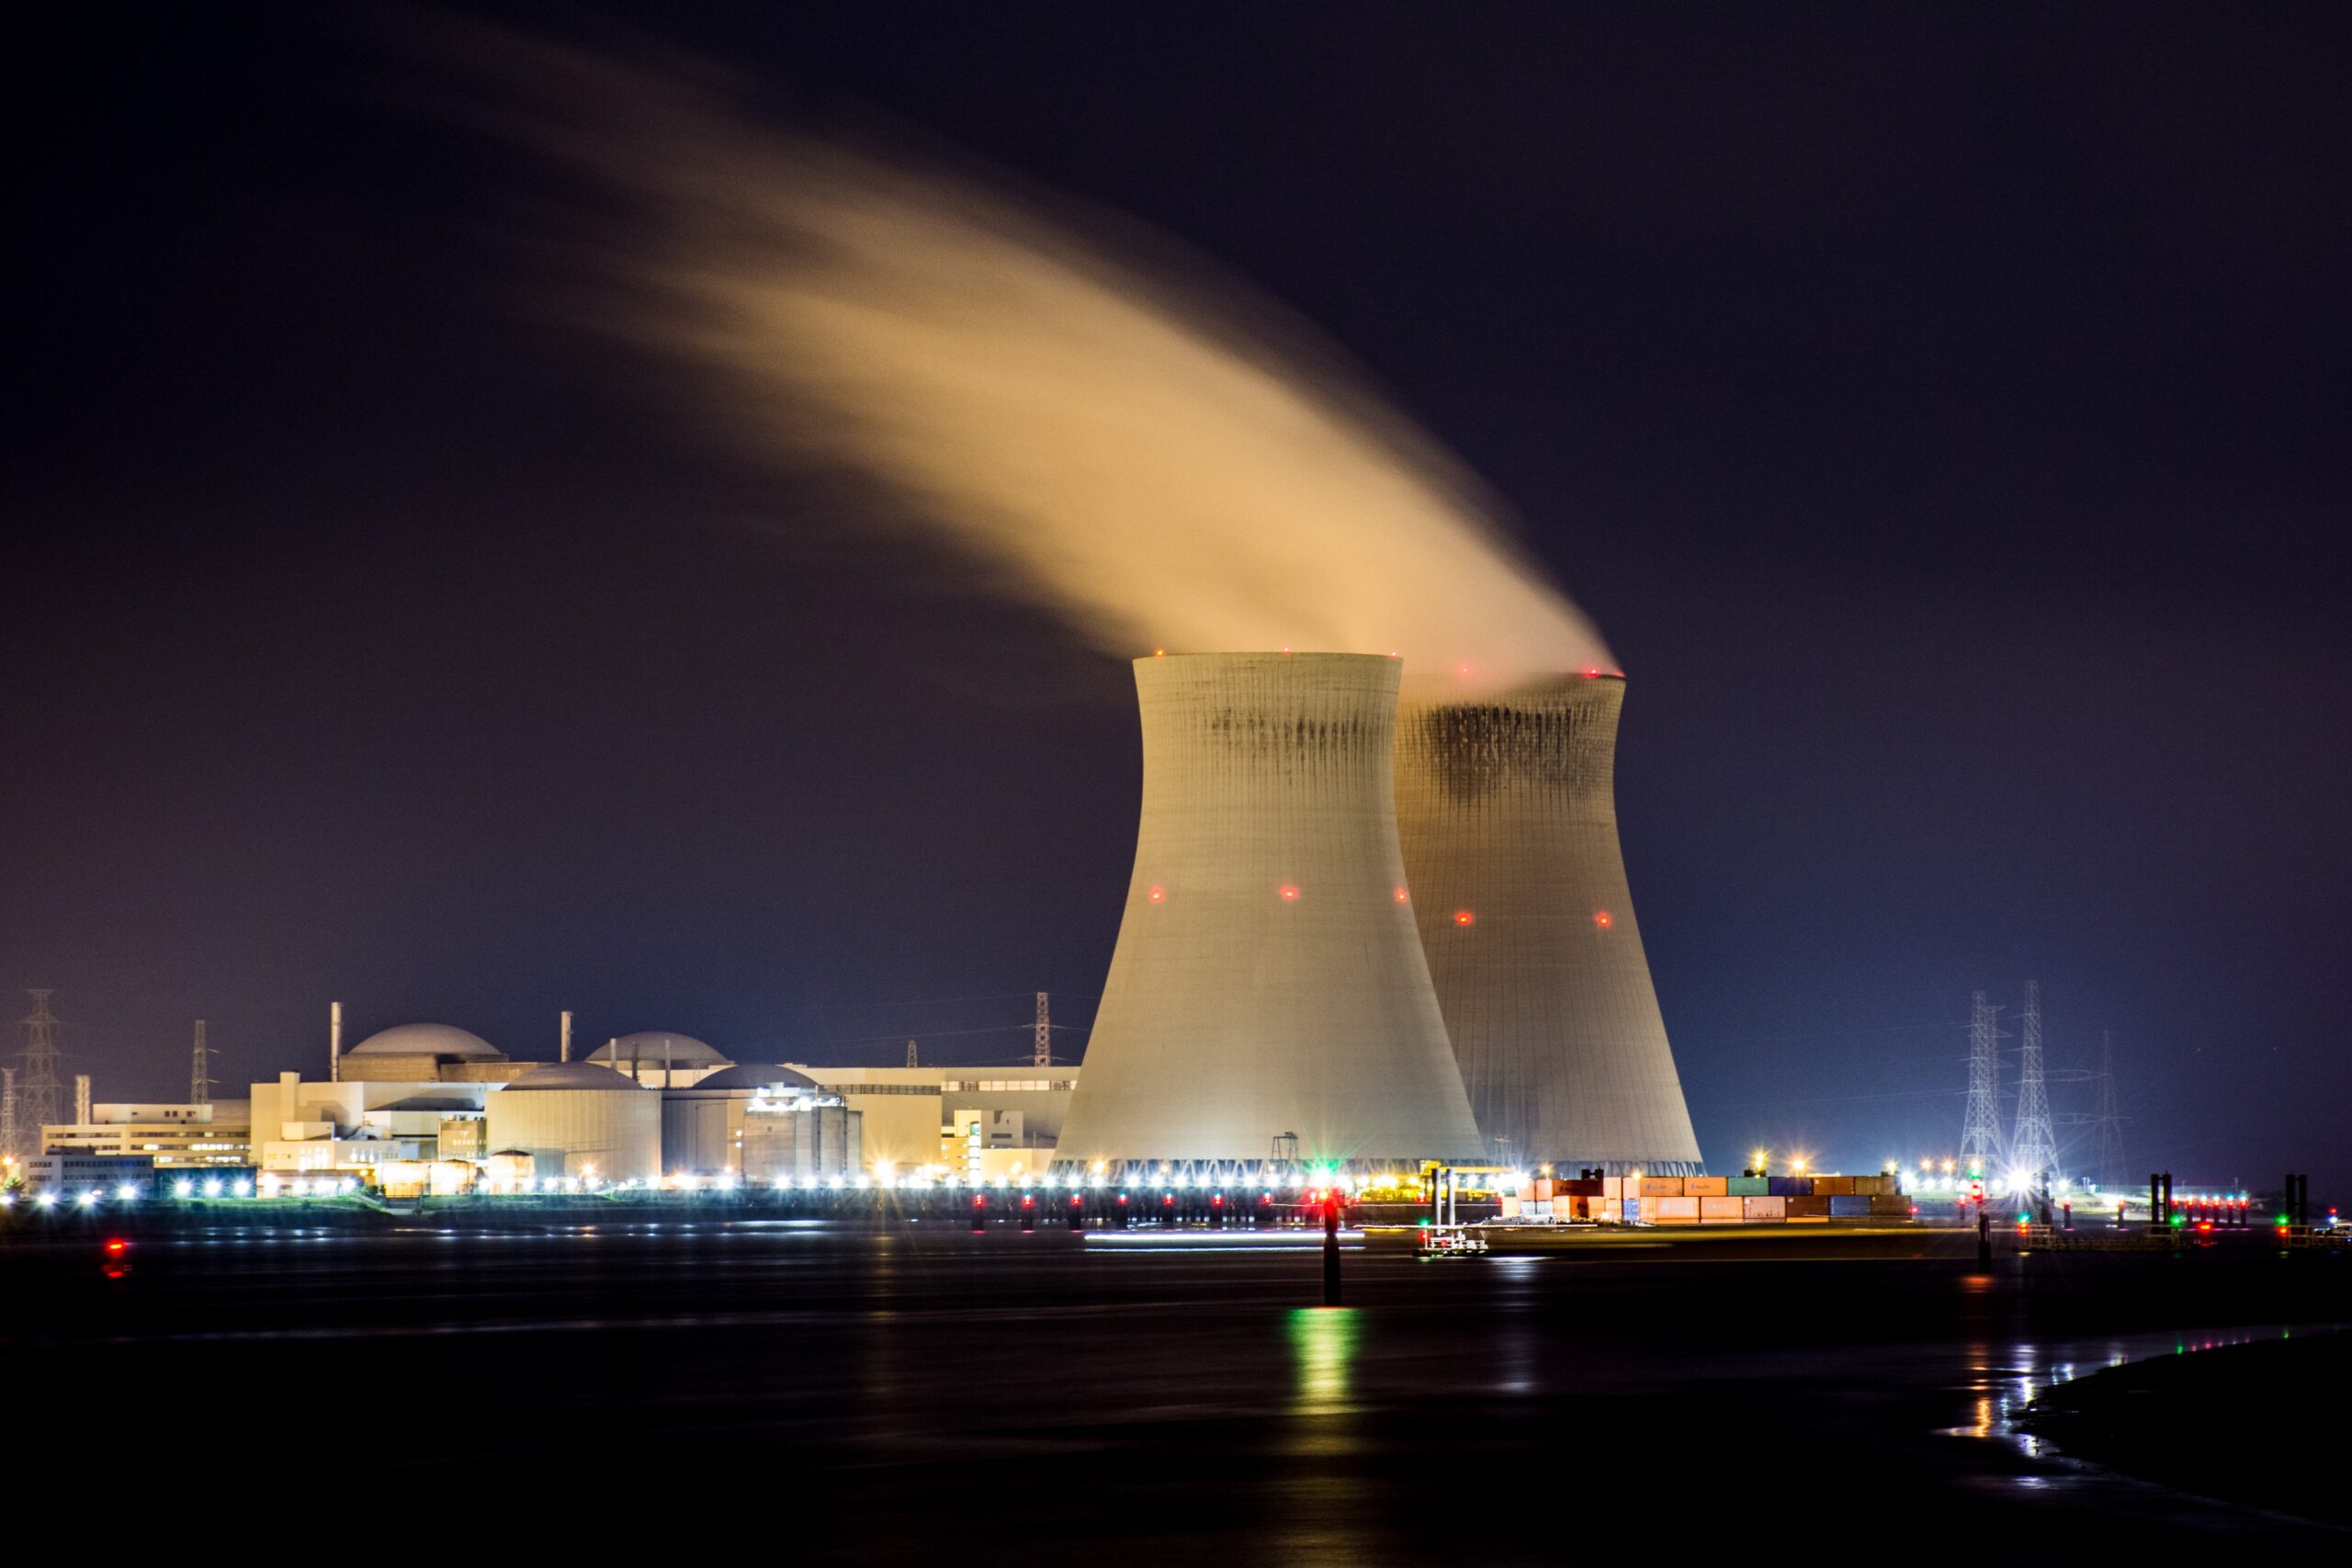 Nuclear power plant (NPP)